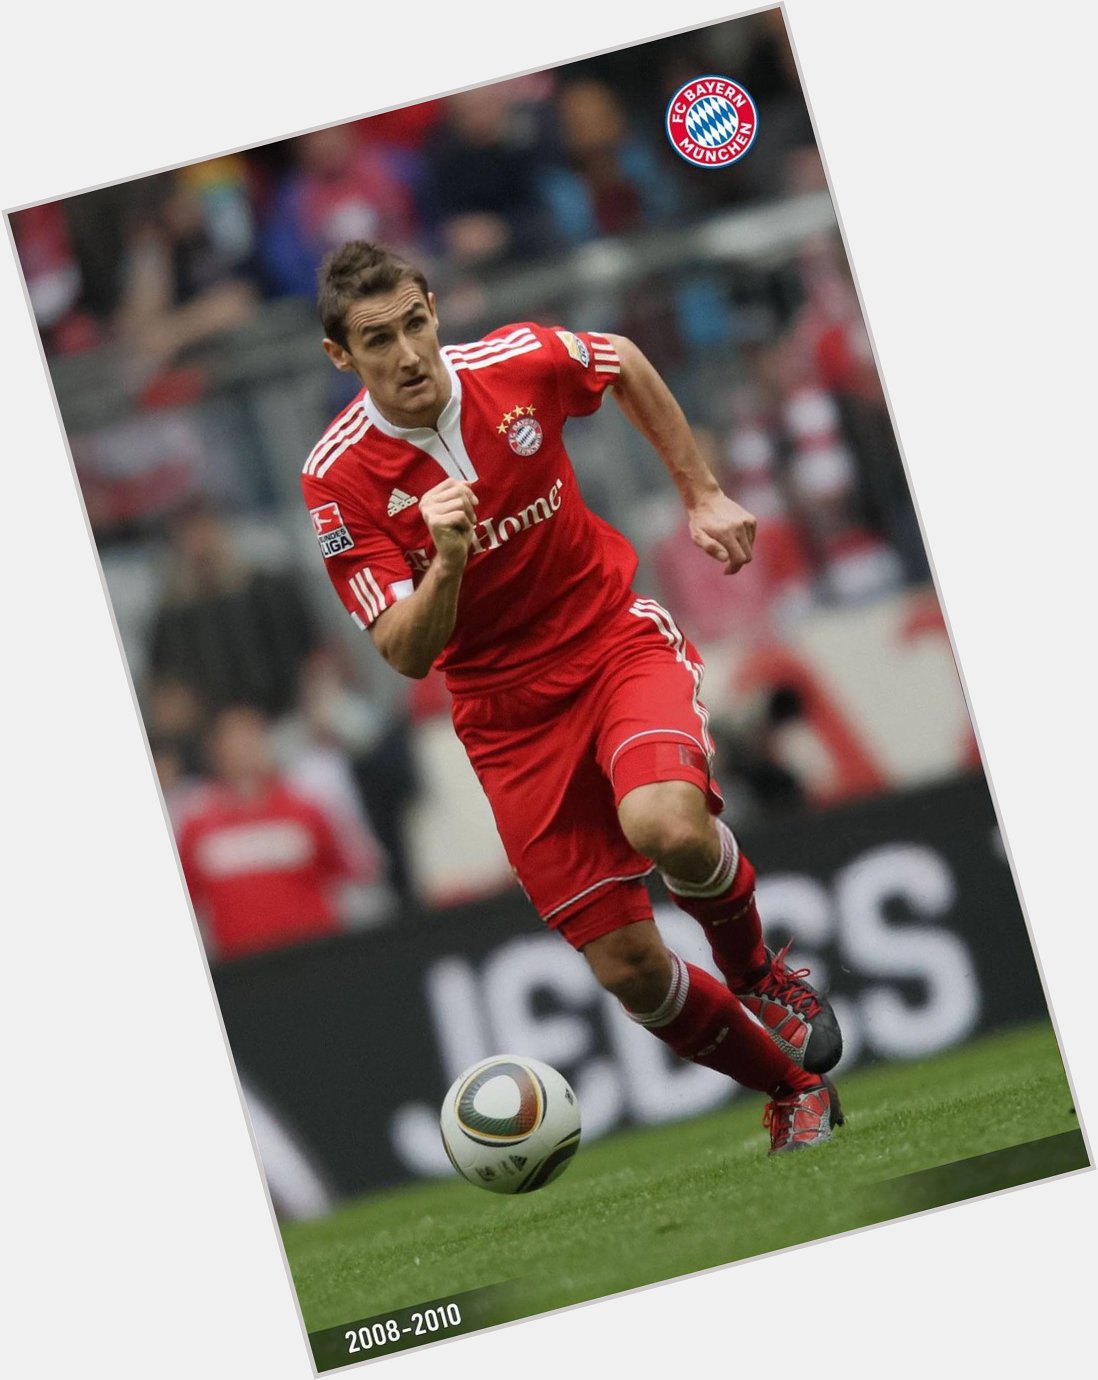 Happy birthday to Miroslav Klose 